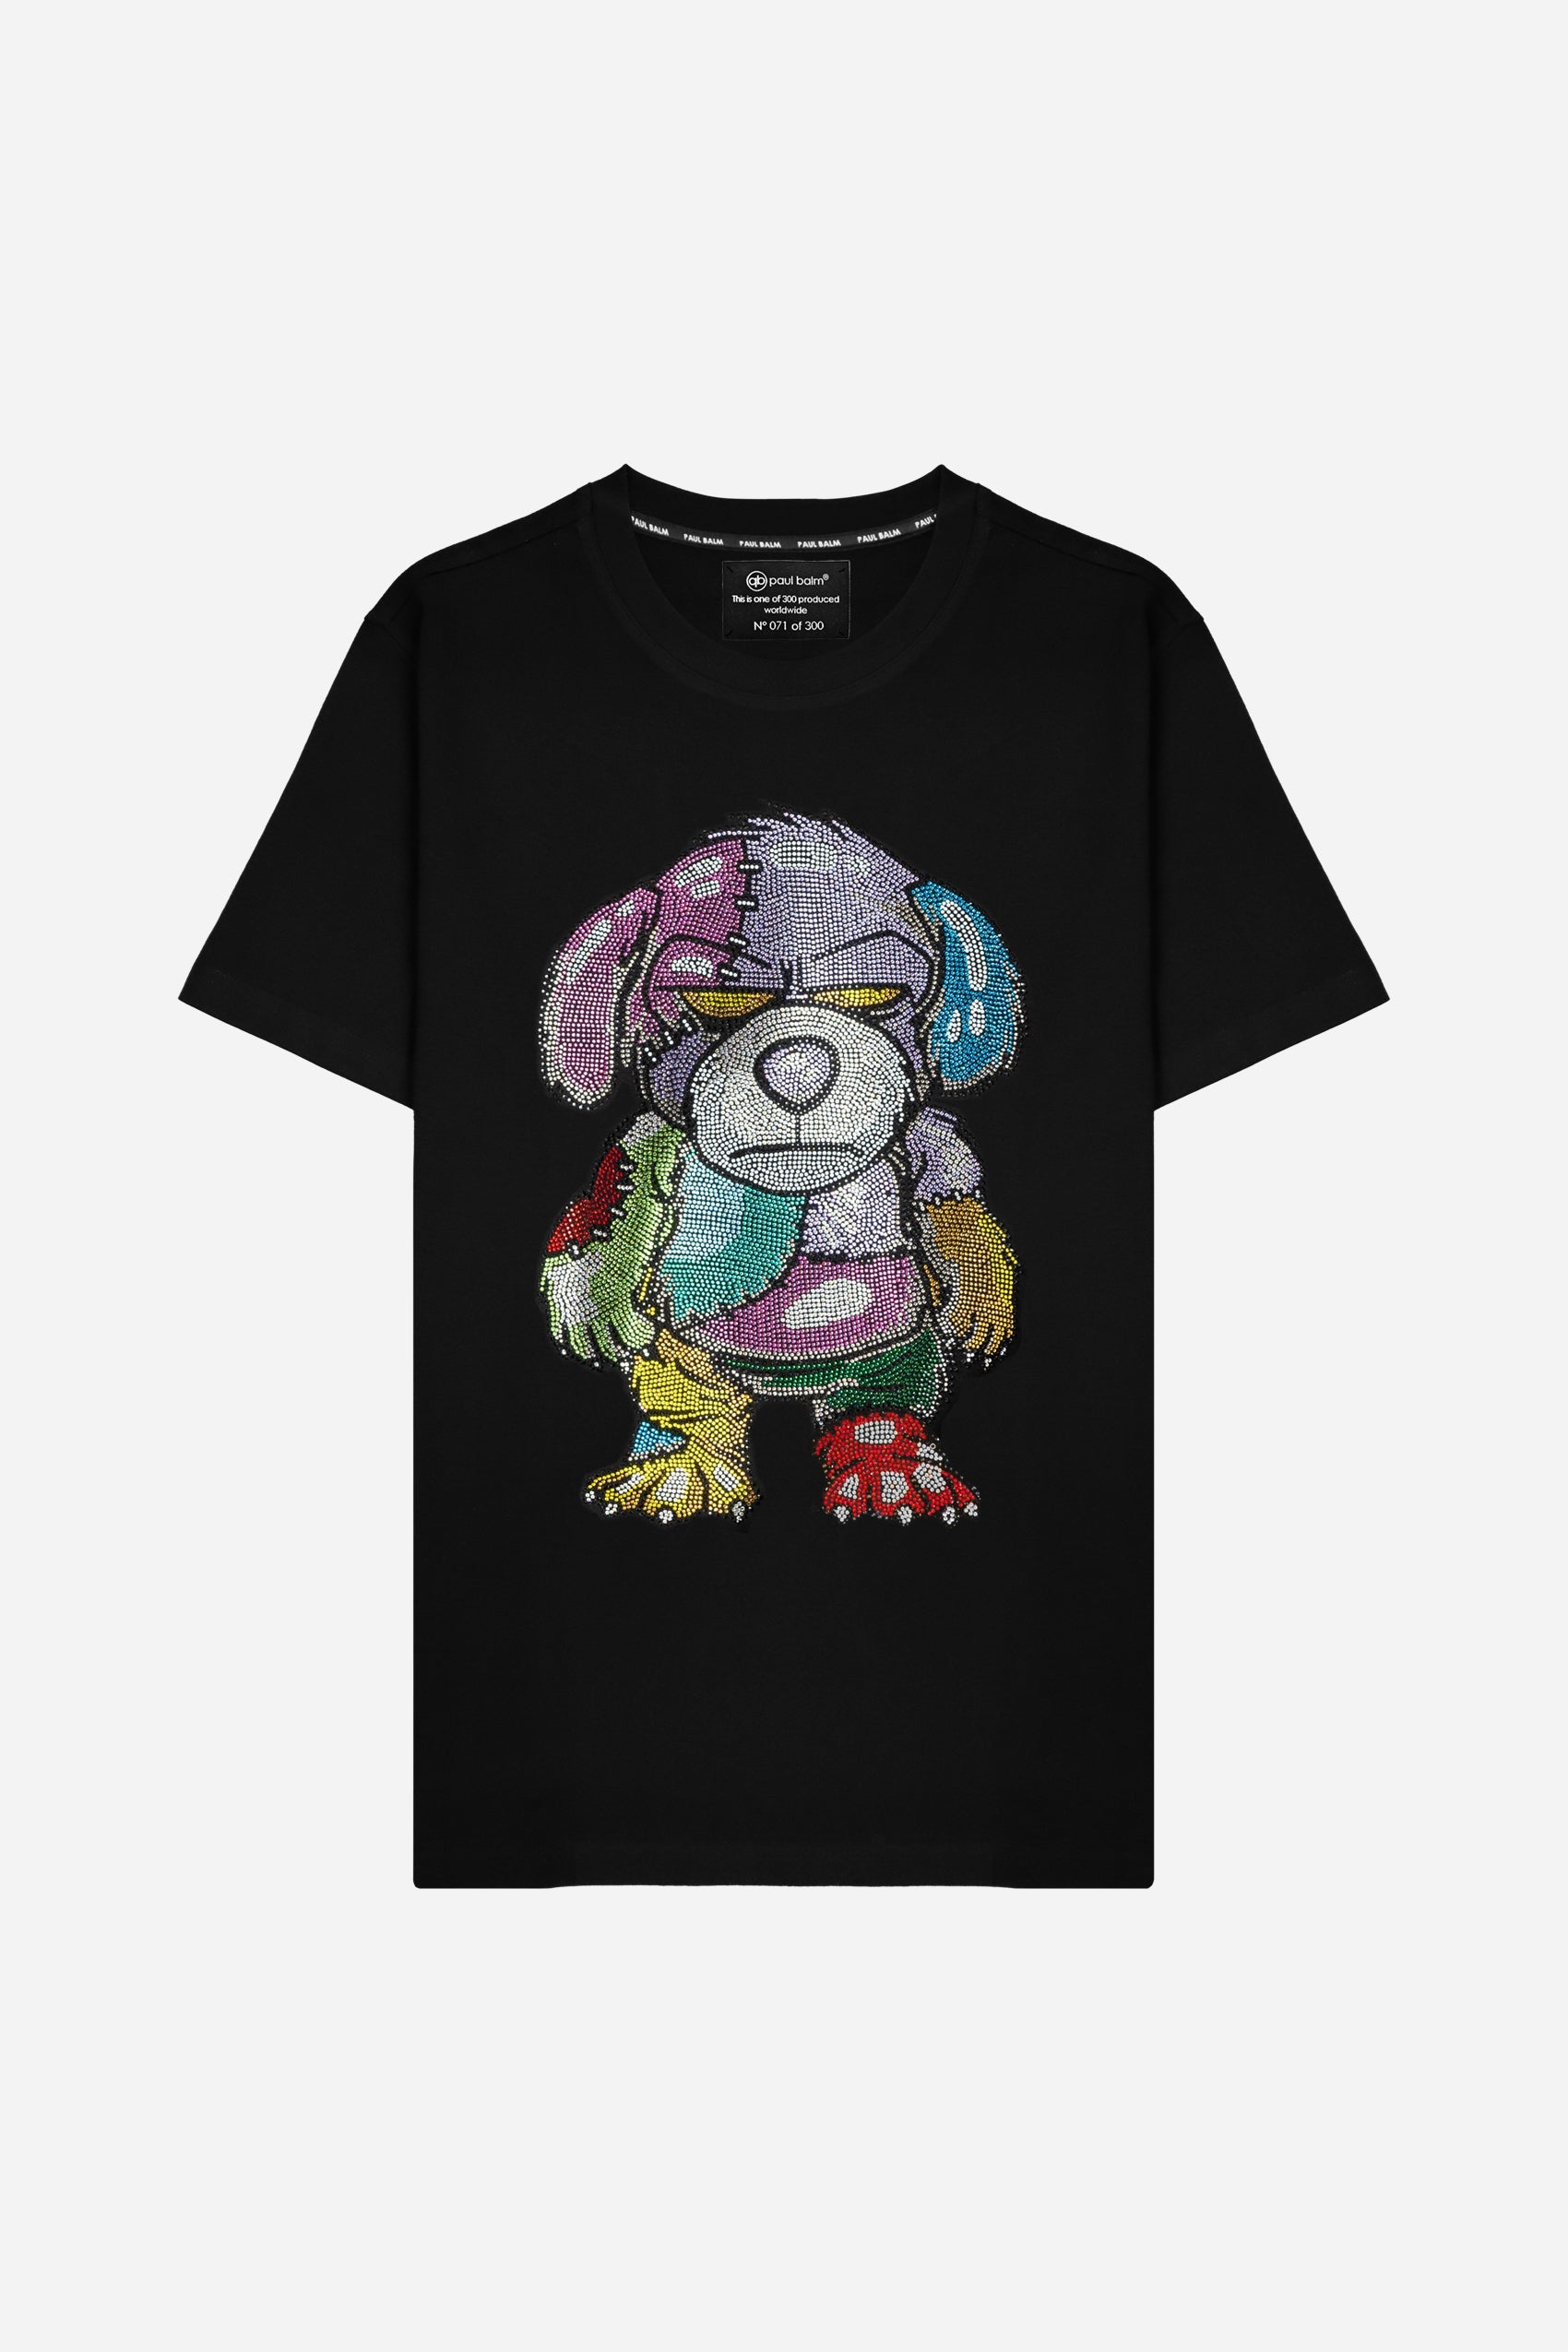 Crystal Rainbow Teddy T-Shirt - Limited to 300 - PAUL BALM WORLD